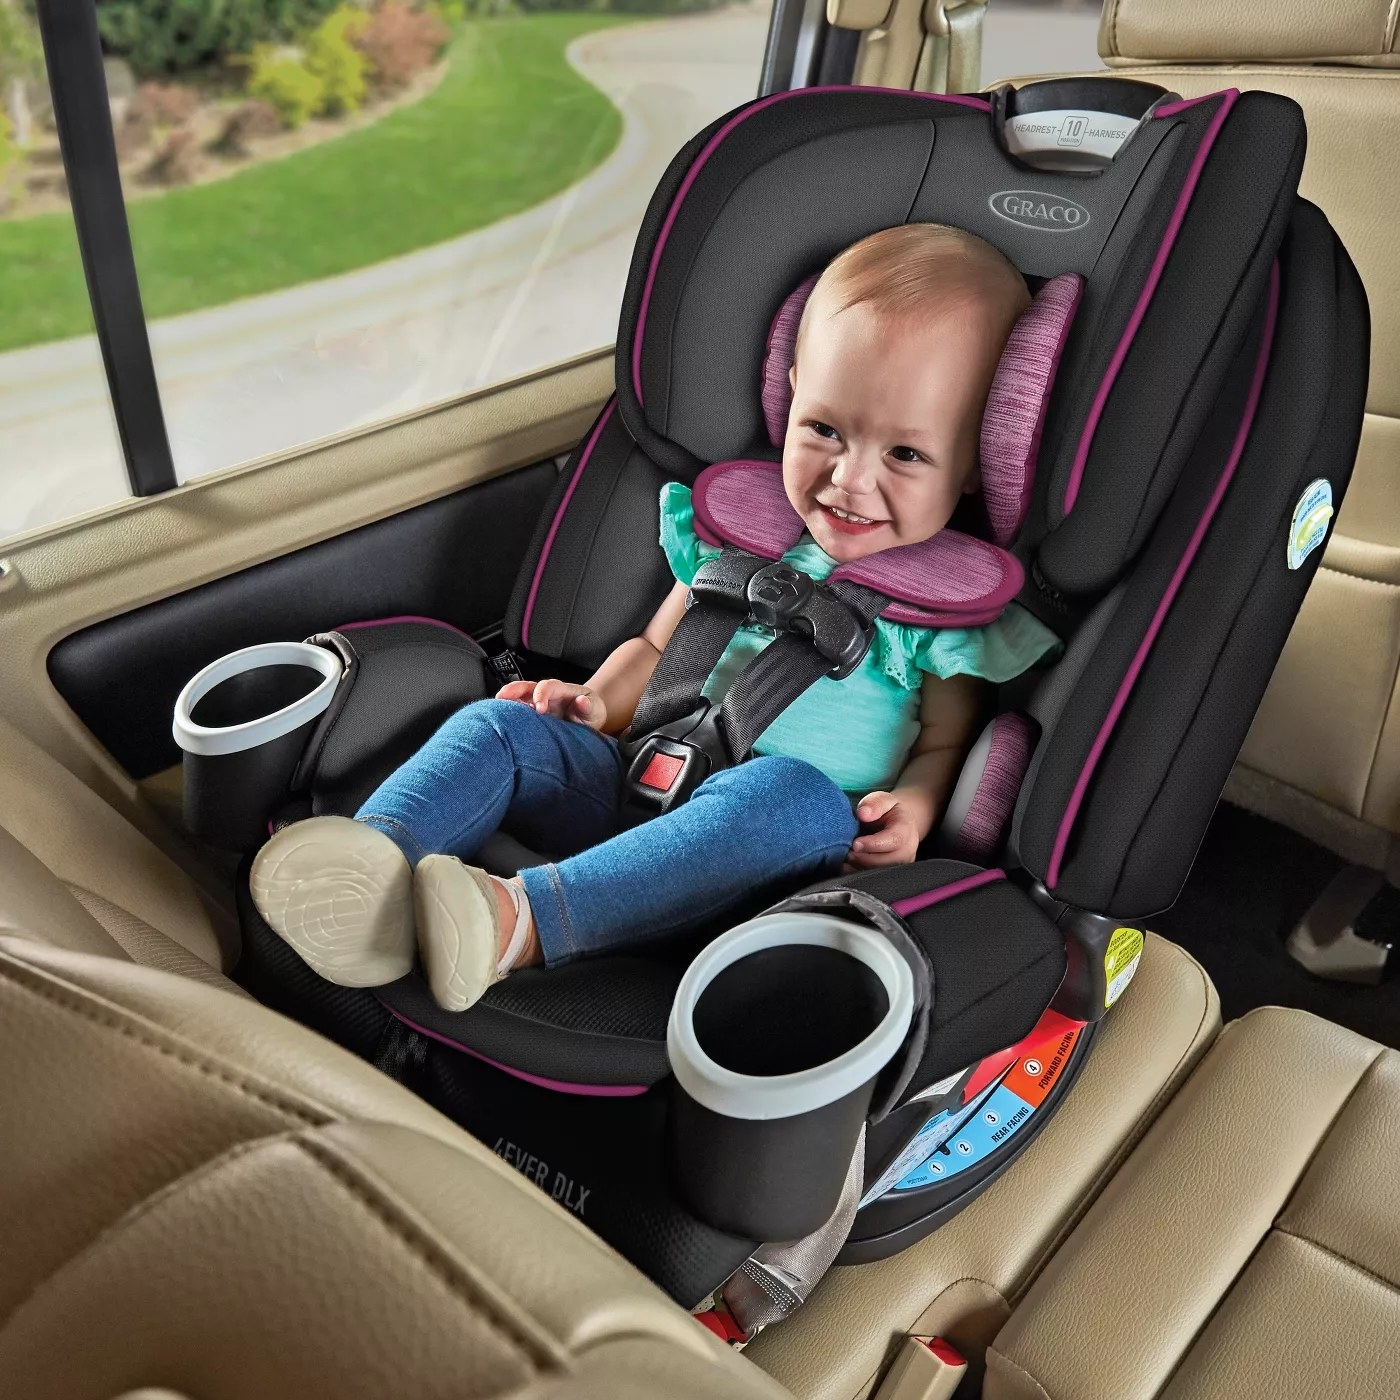 Toddler in a rear facing car seat 